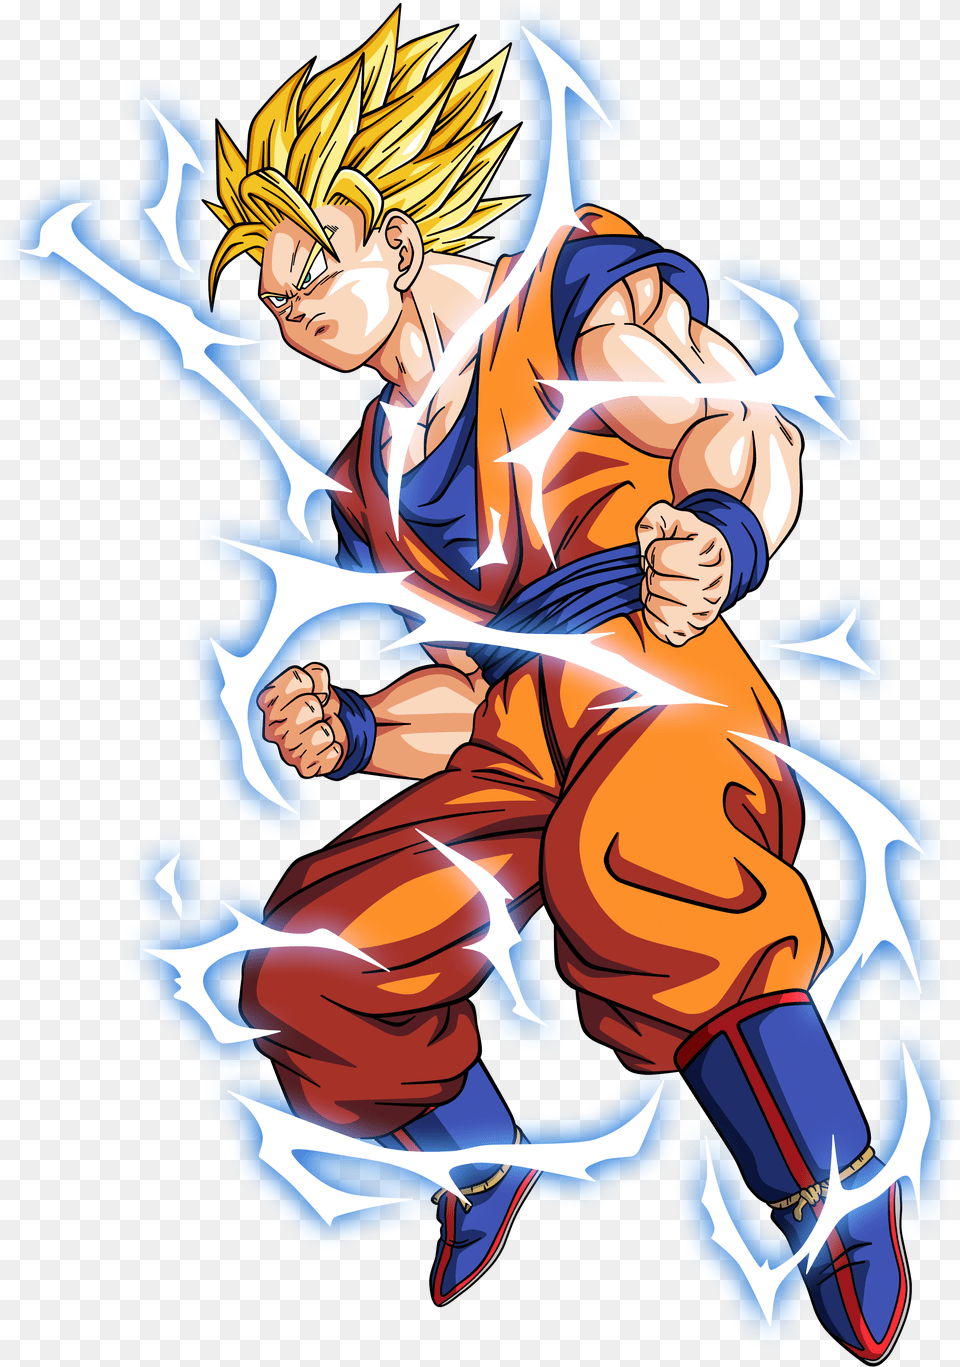 Goku Super Saiyan 2 By Bardocksonic D73adde Dragon Ball Z Illustration, Book, Comics, Publication, Anime Png